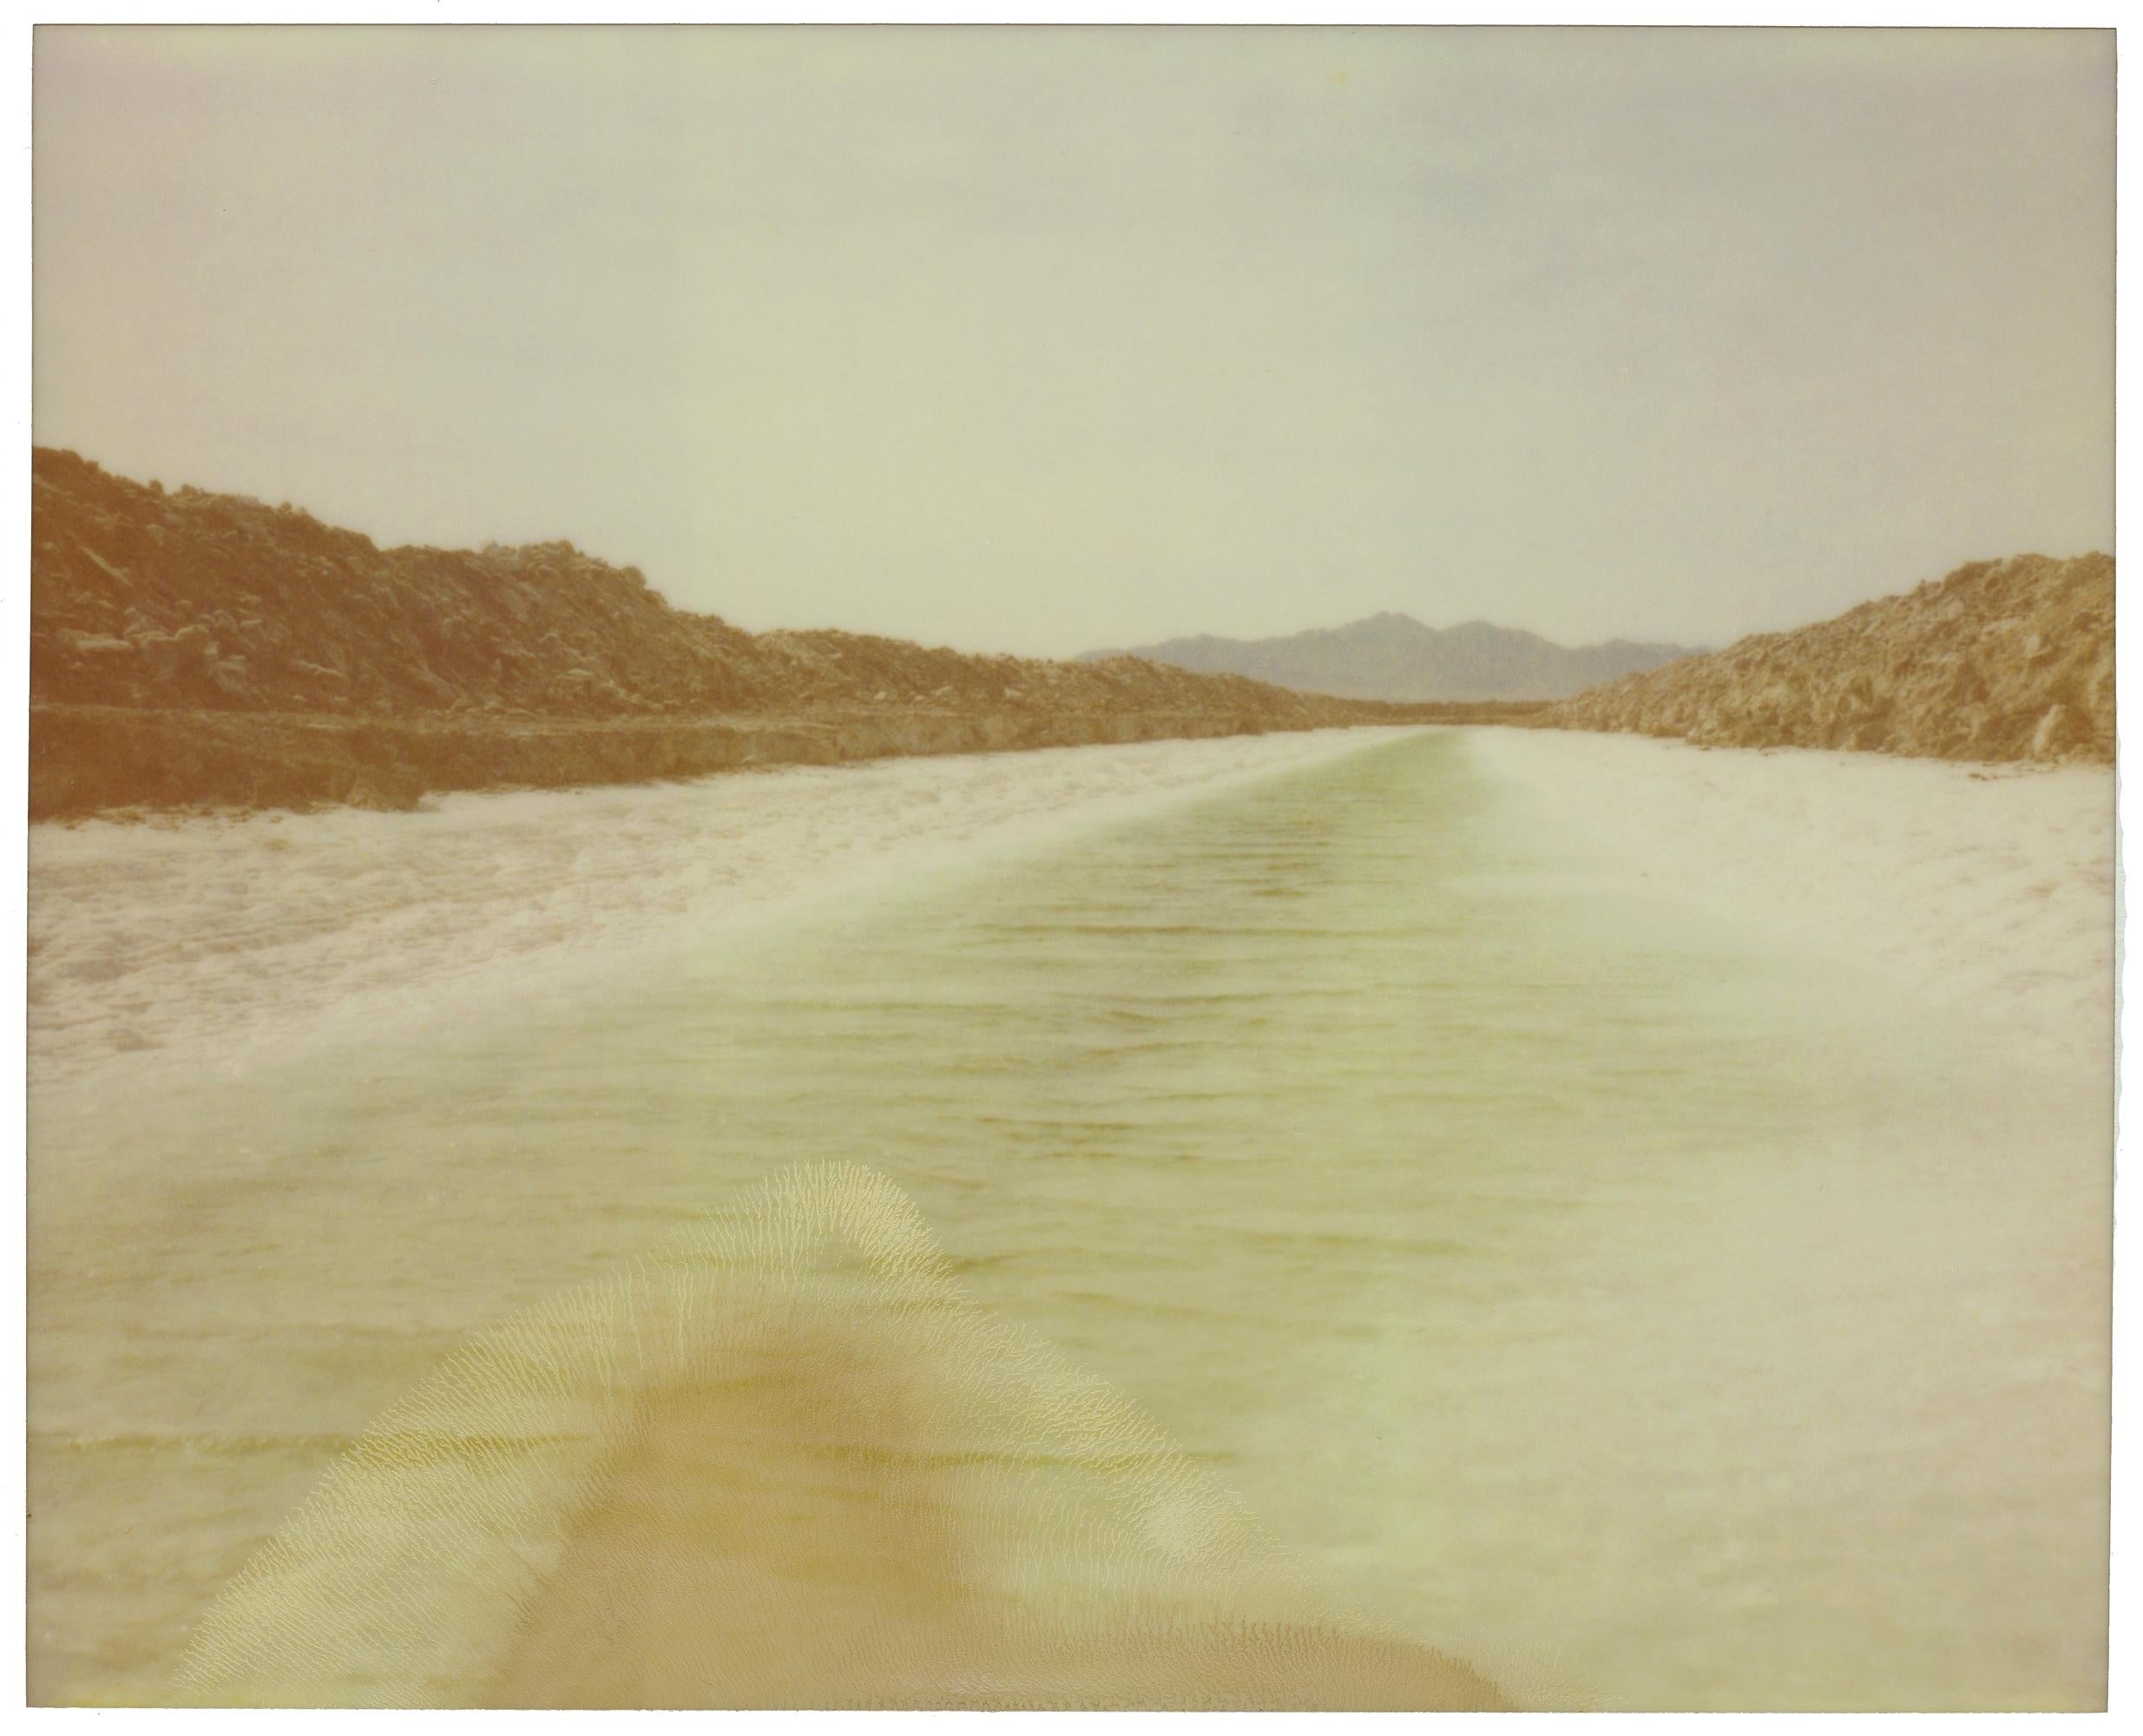 Stefanie Schneider Landscape Photograph - Amboy Salt Flats (California Badlands) - Contemporary, Polaroid, Landscape